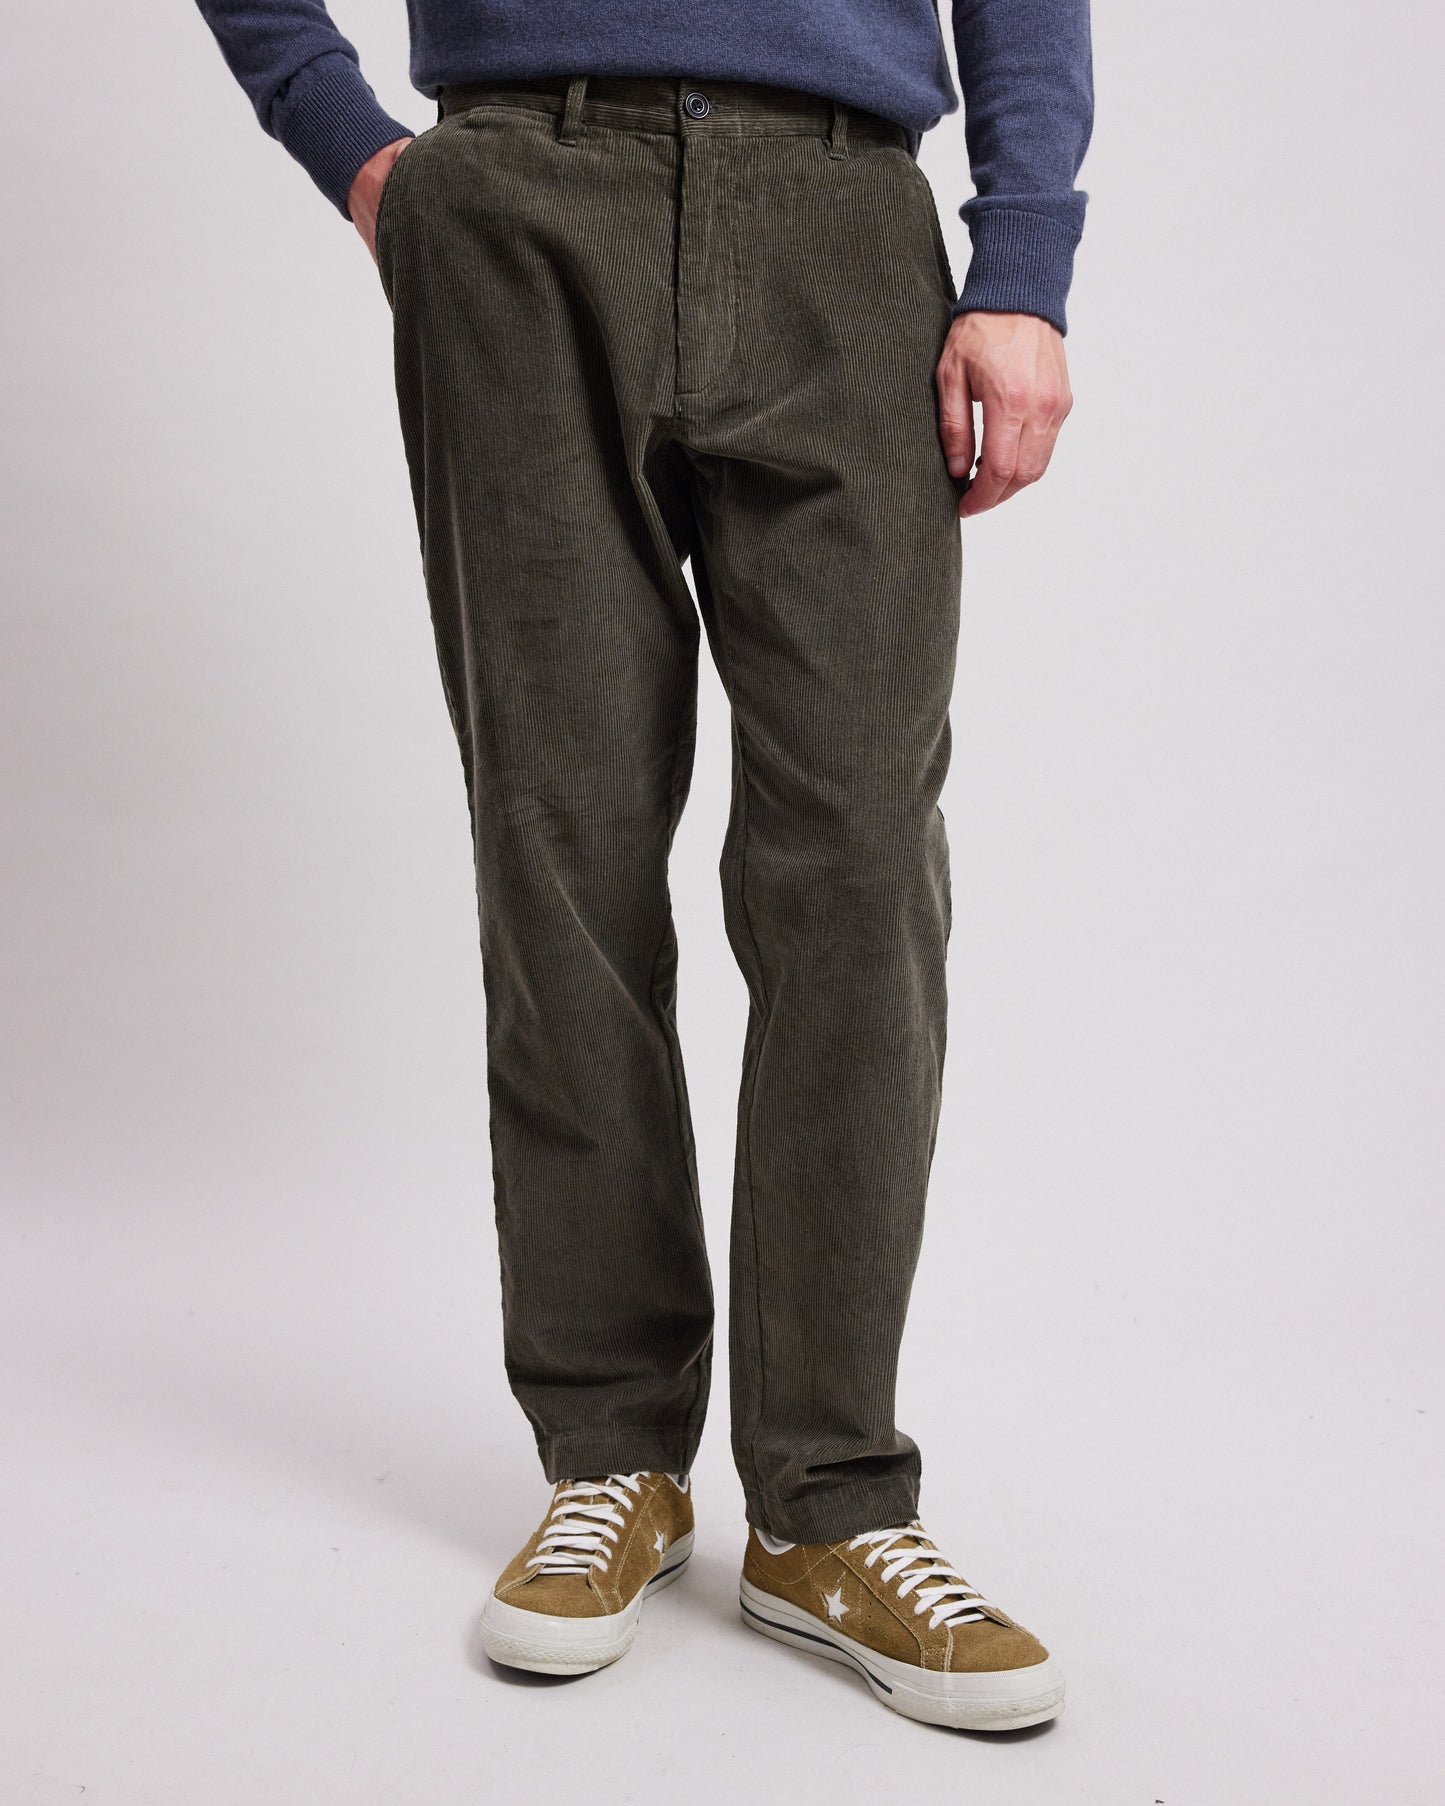 Pantalon Homme en velours côtelé Vert Olive Tyron BC57103-05